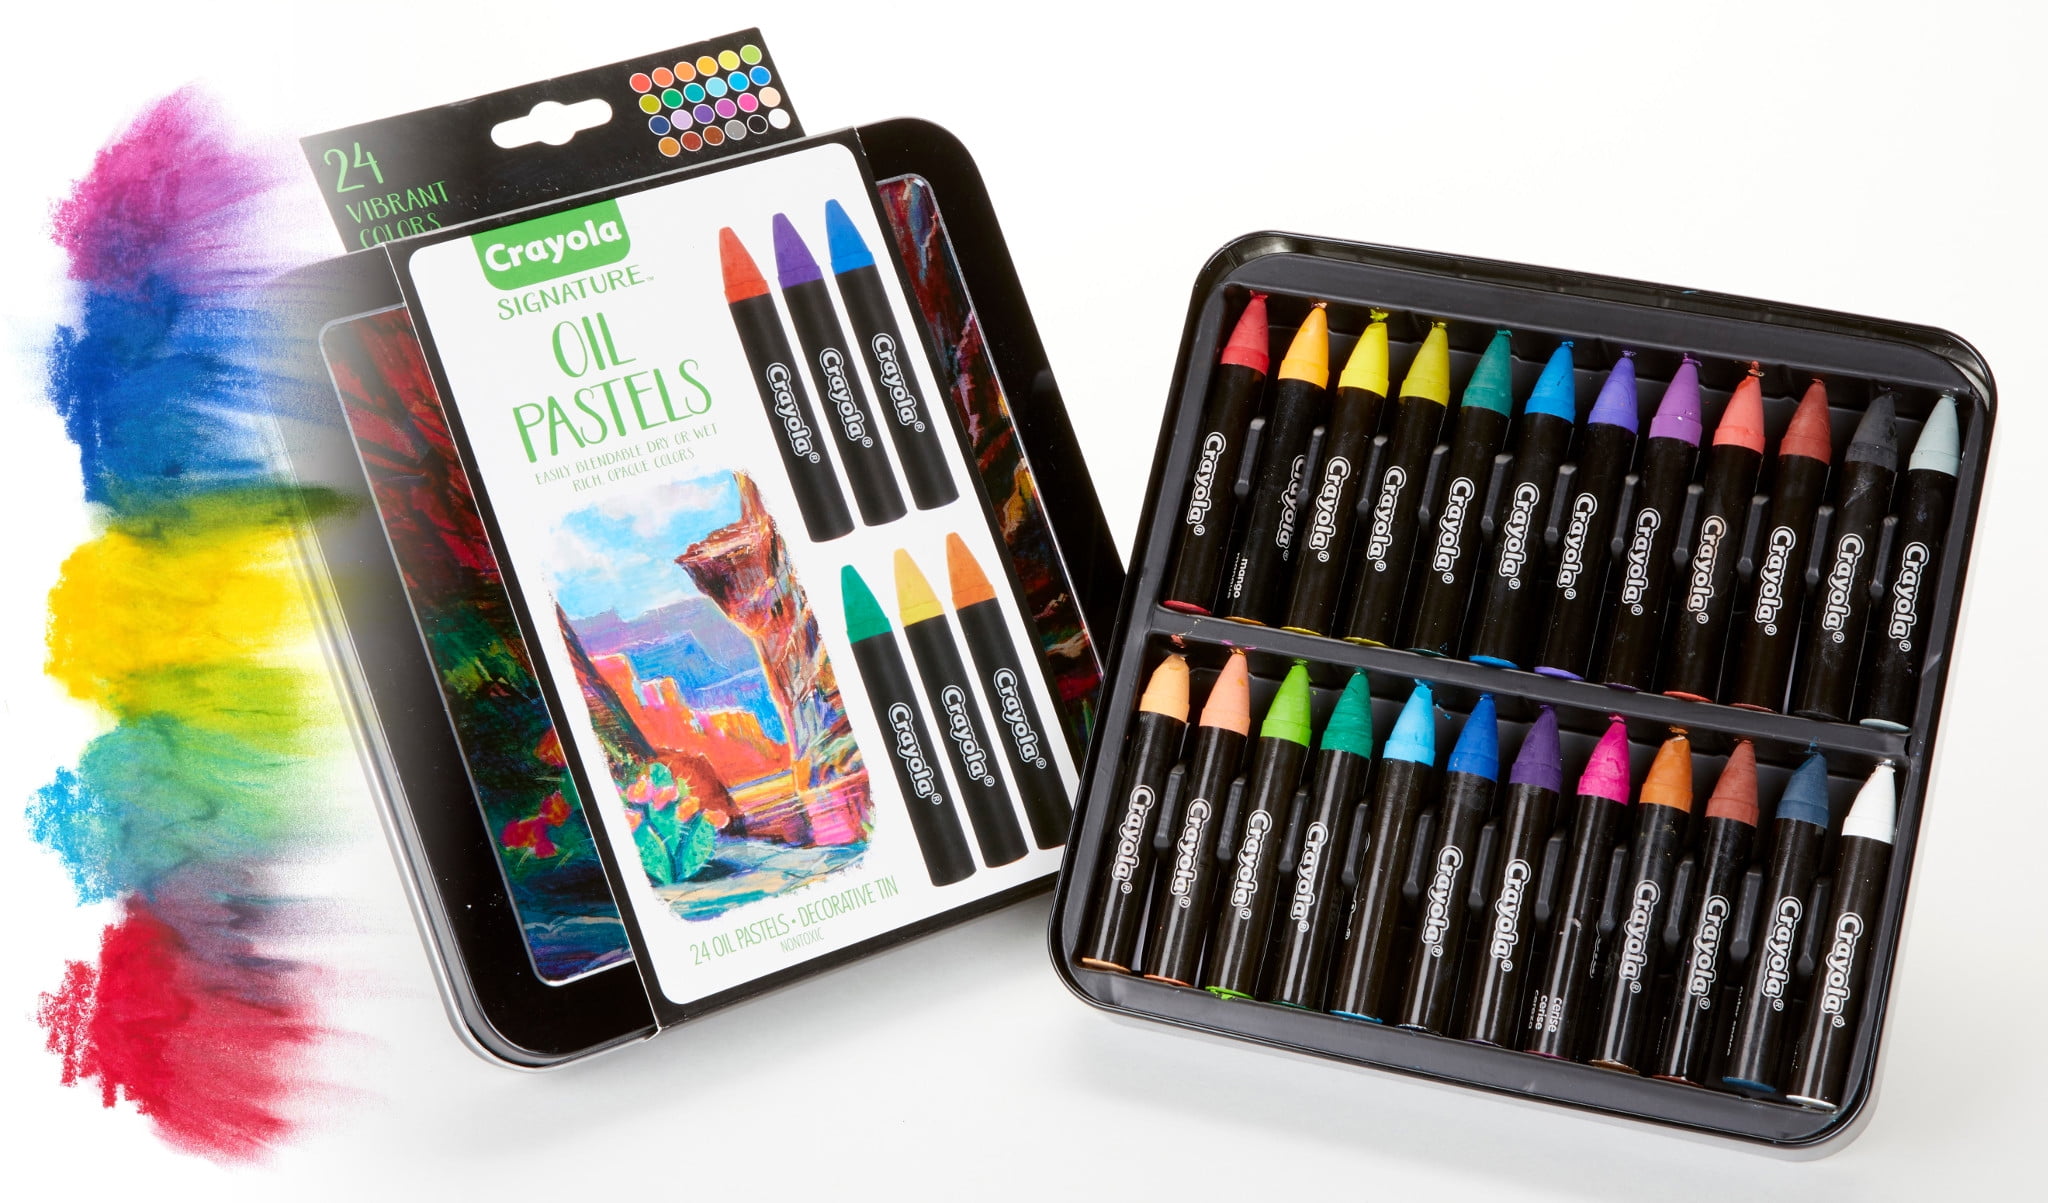 Crayola Oil Pastels 16/28 – Brain Tinker